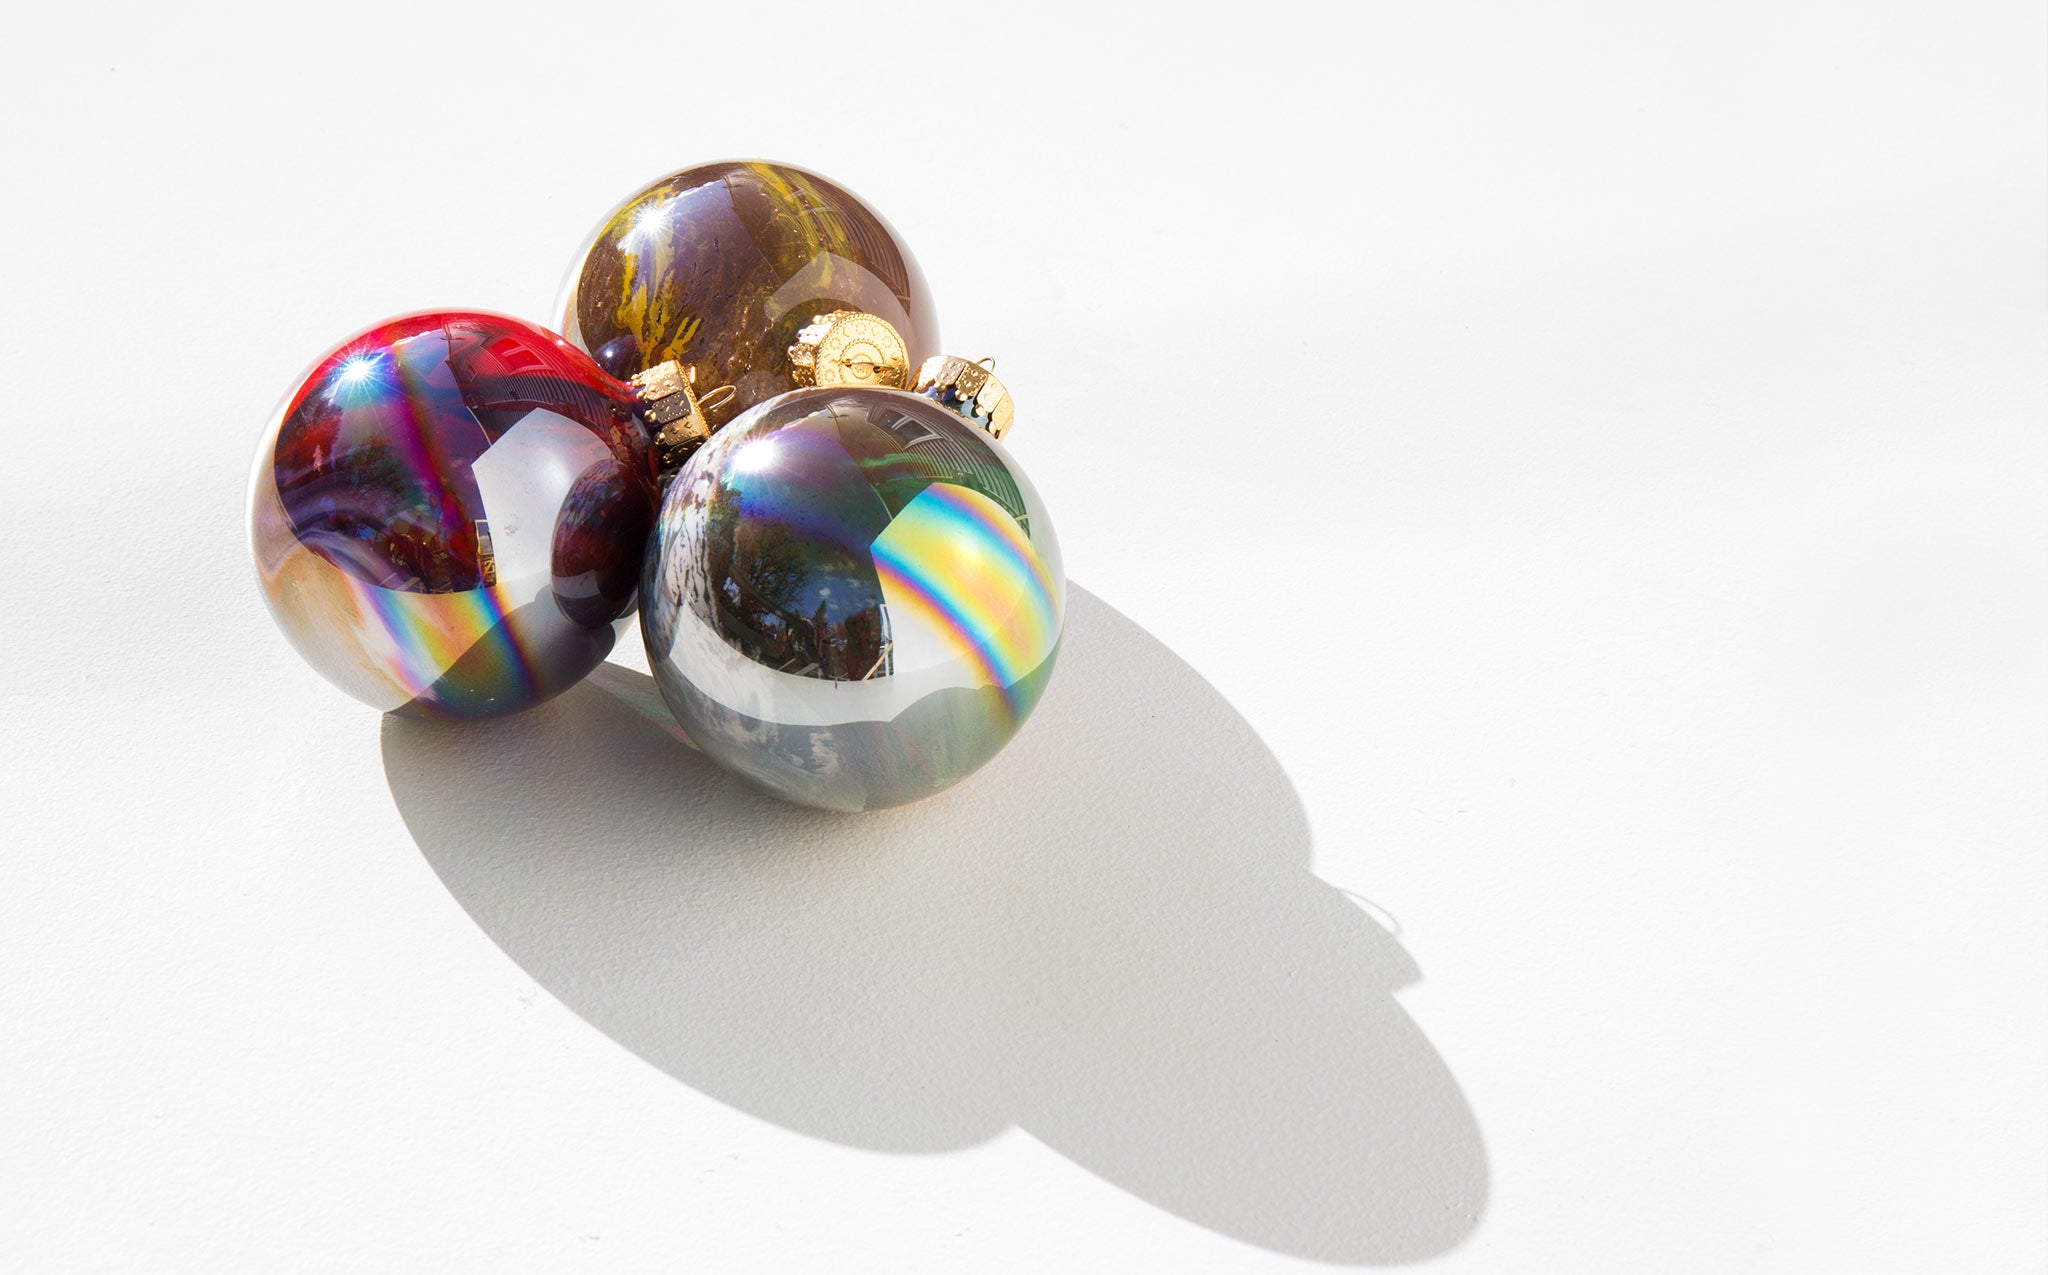 Marbled Oils Ornament Set